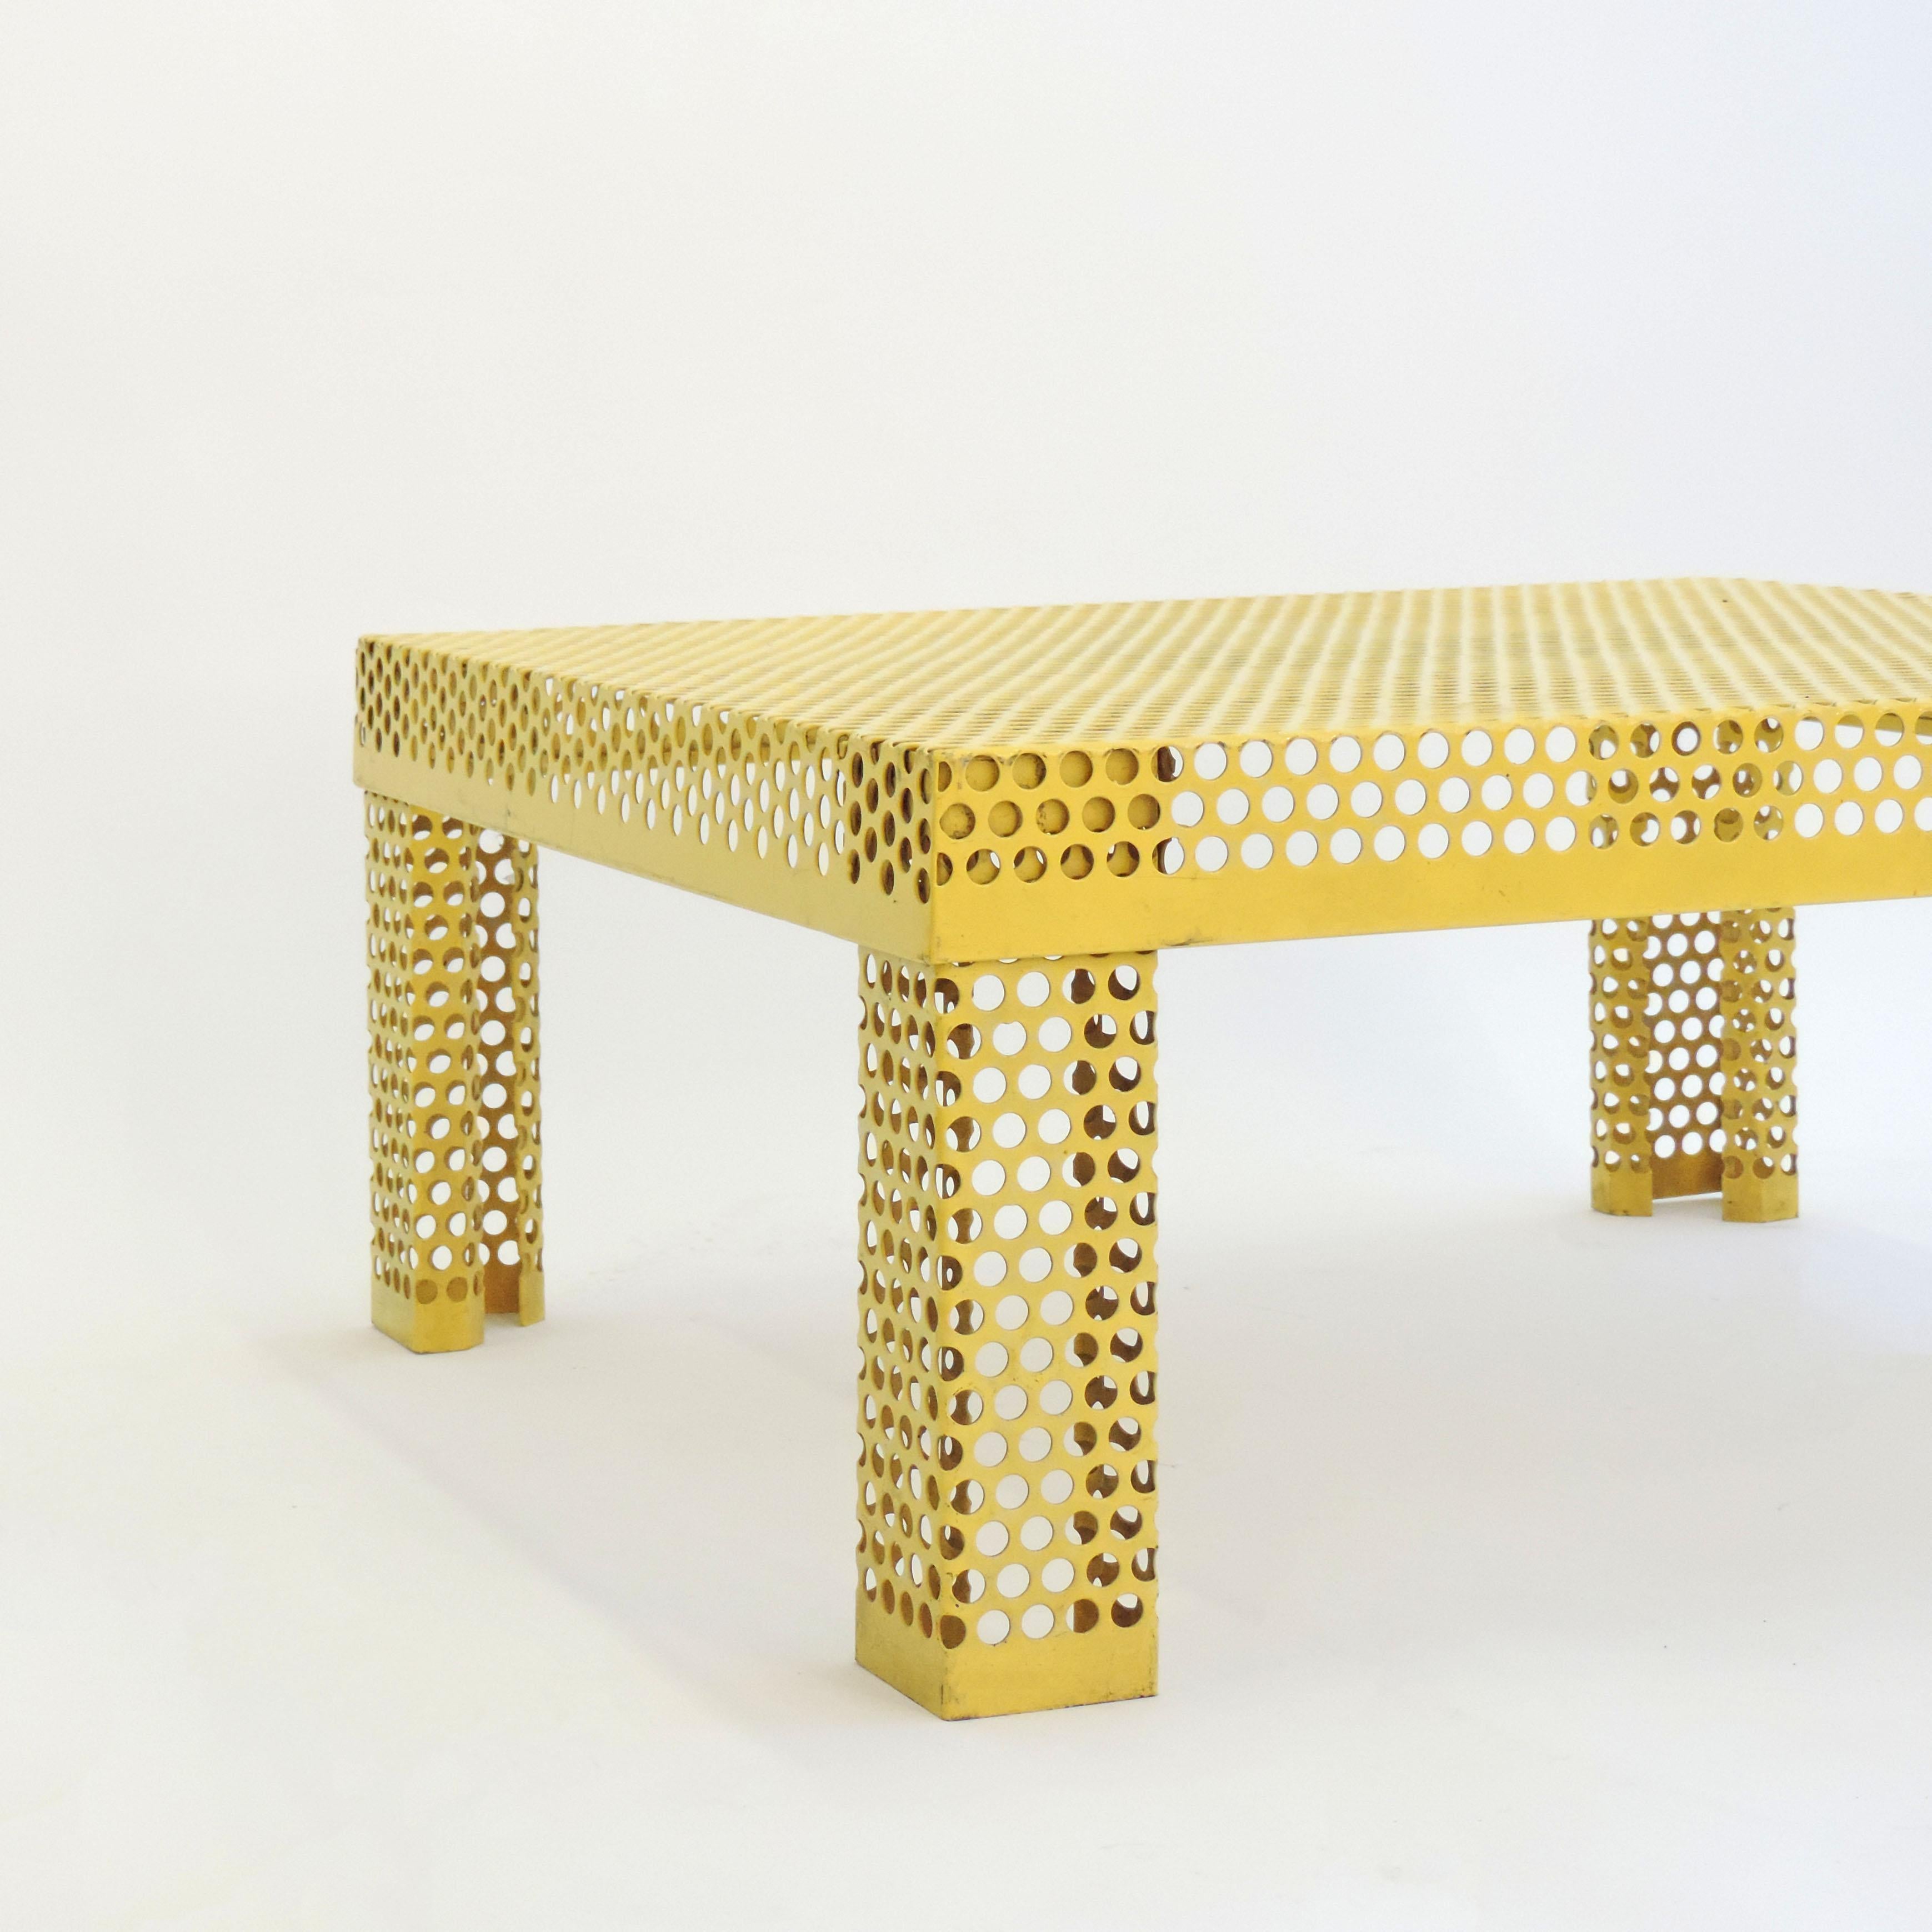 Italian 'Pleinair' Low Table in Perforated Metal by Ammannati & Vitelli for Brunati